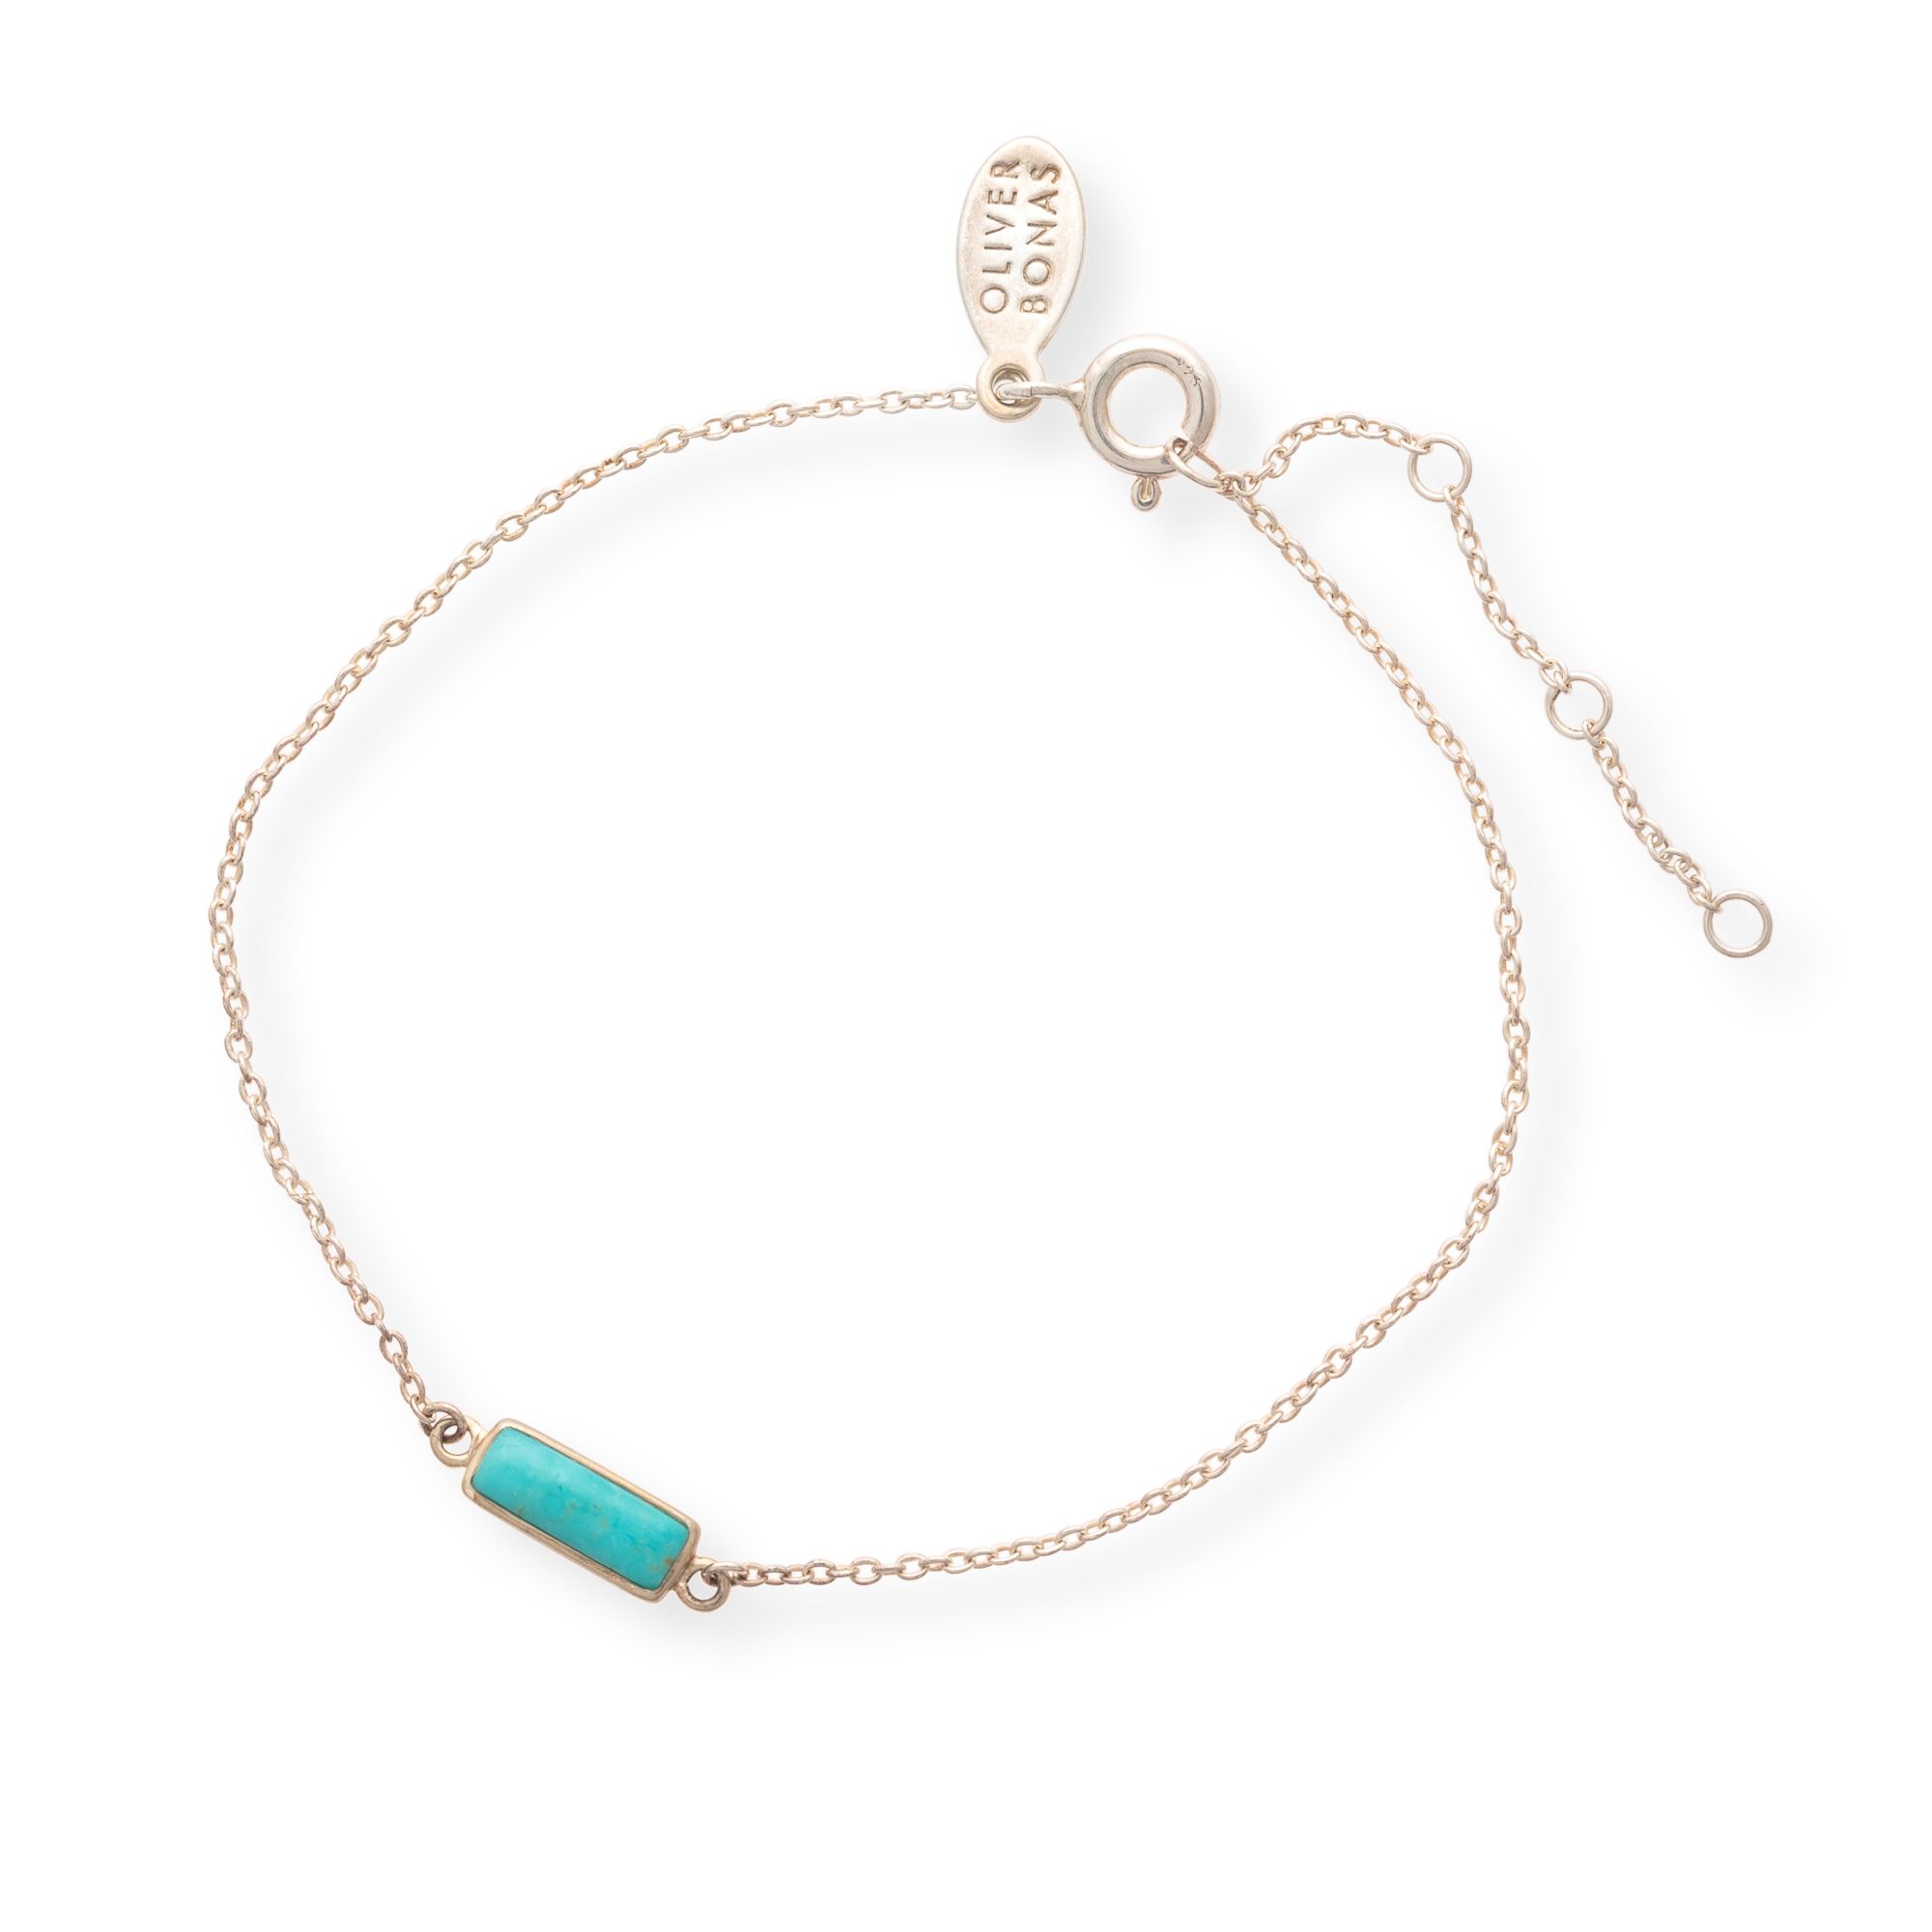 Buy Ayona Turquoise Bar Silver Bracelet from Oliver Bonas | Turquoise ...